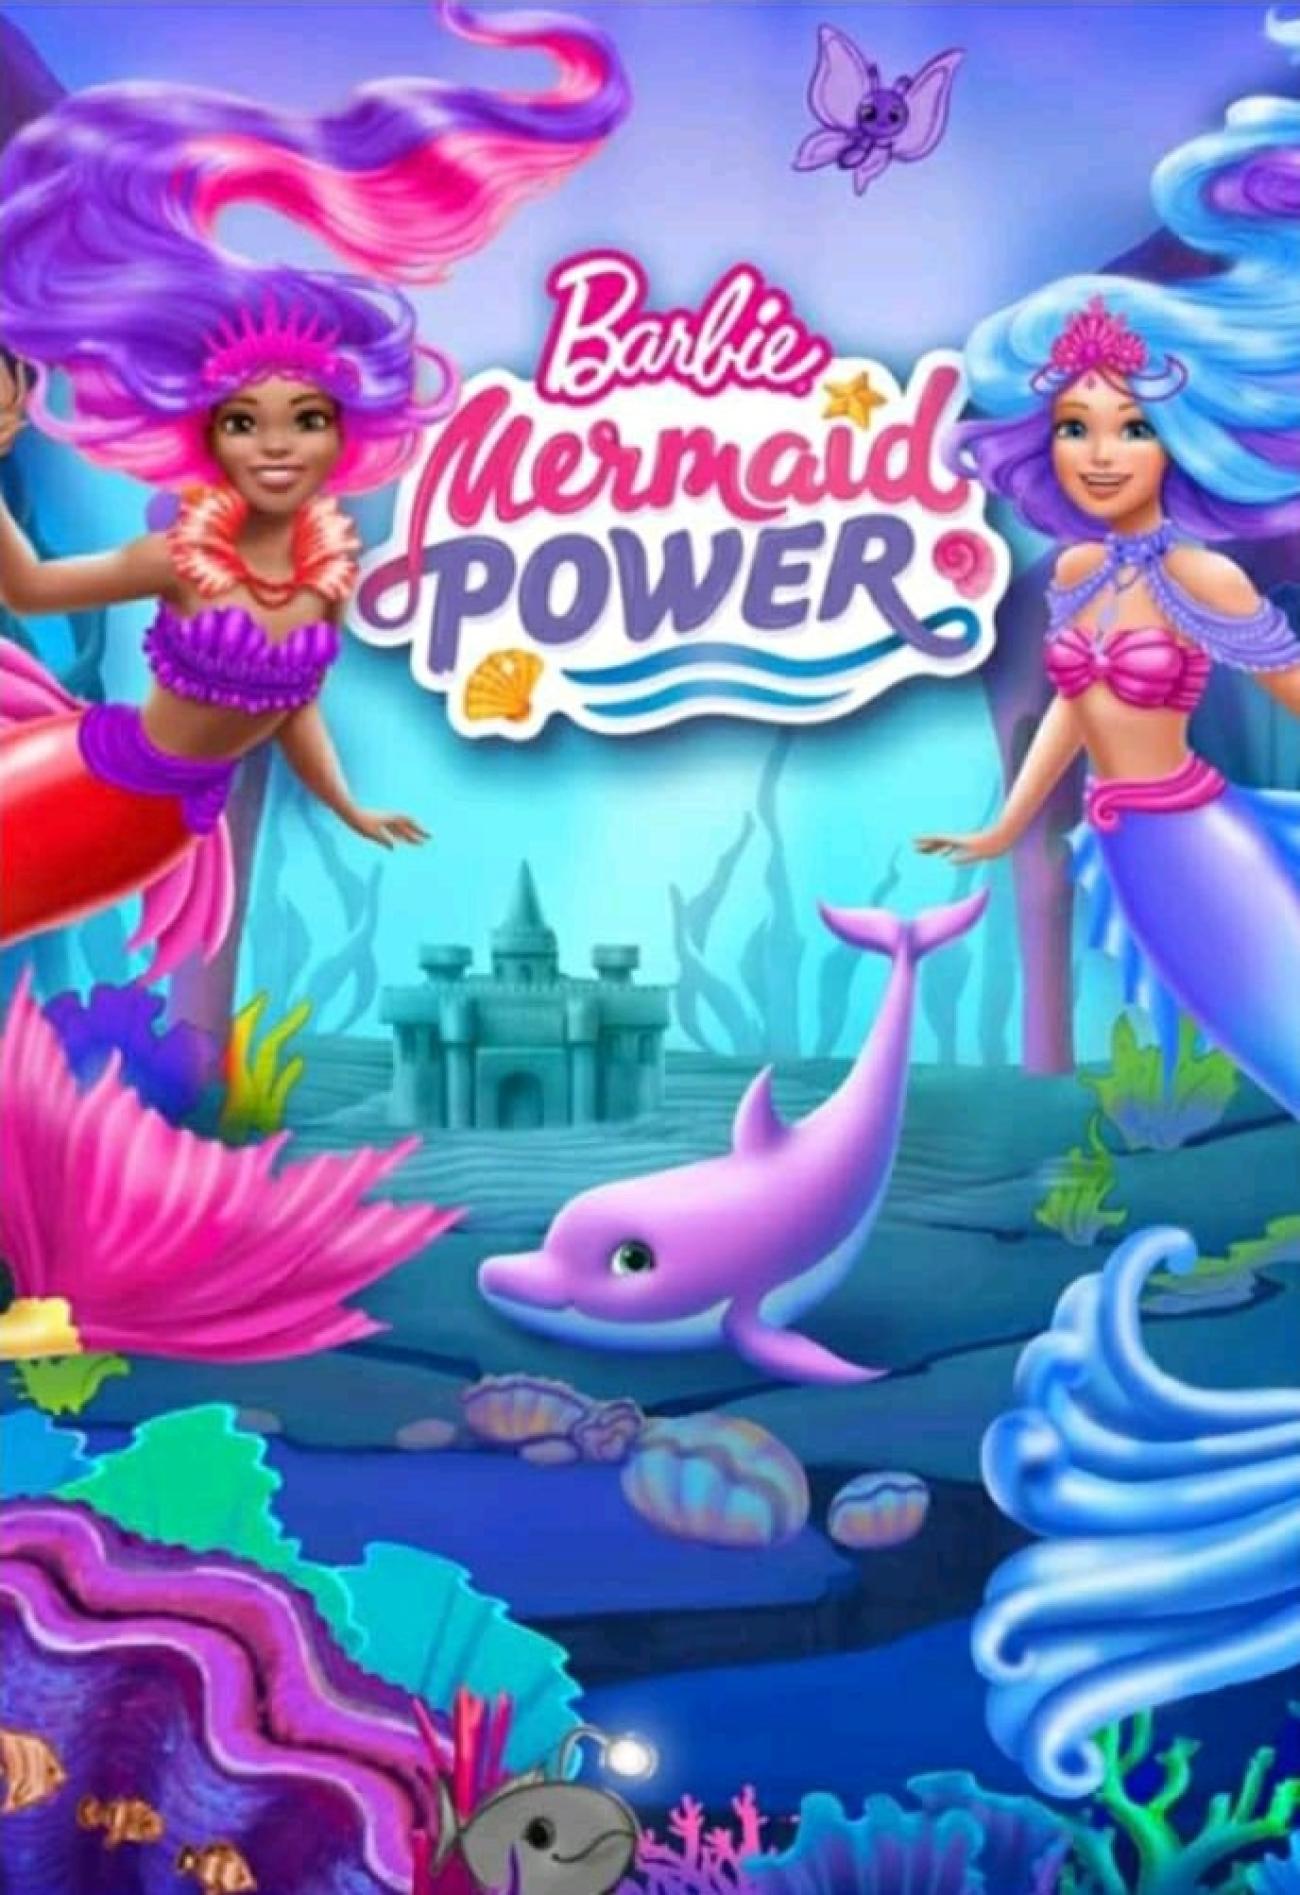 Watch Barbie Mermaid Power Online For Free On 123movies